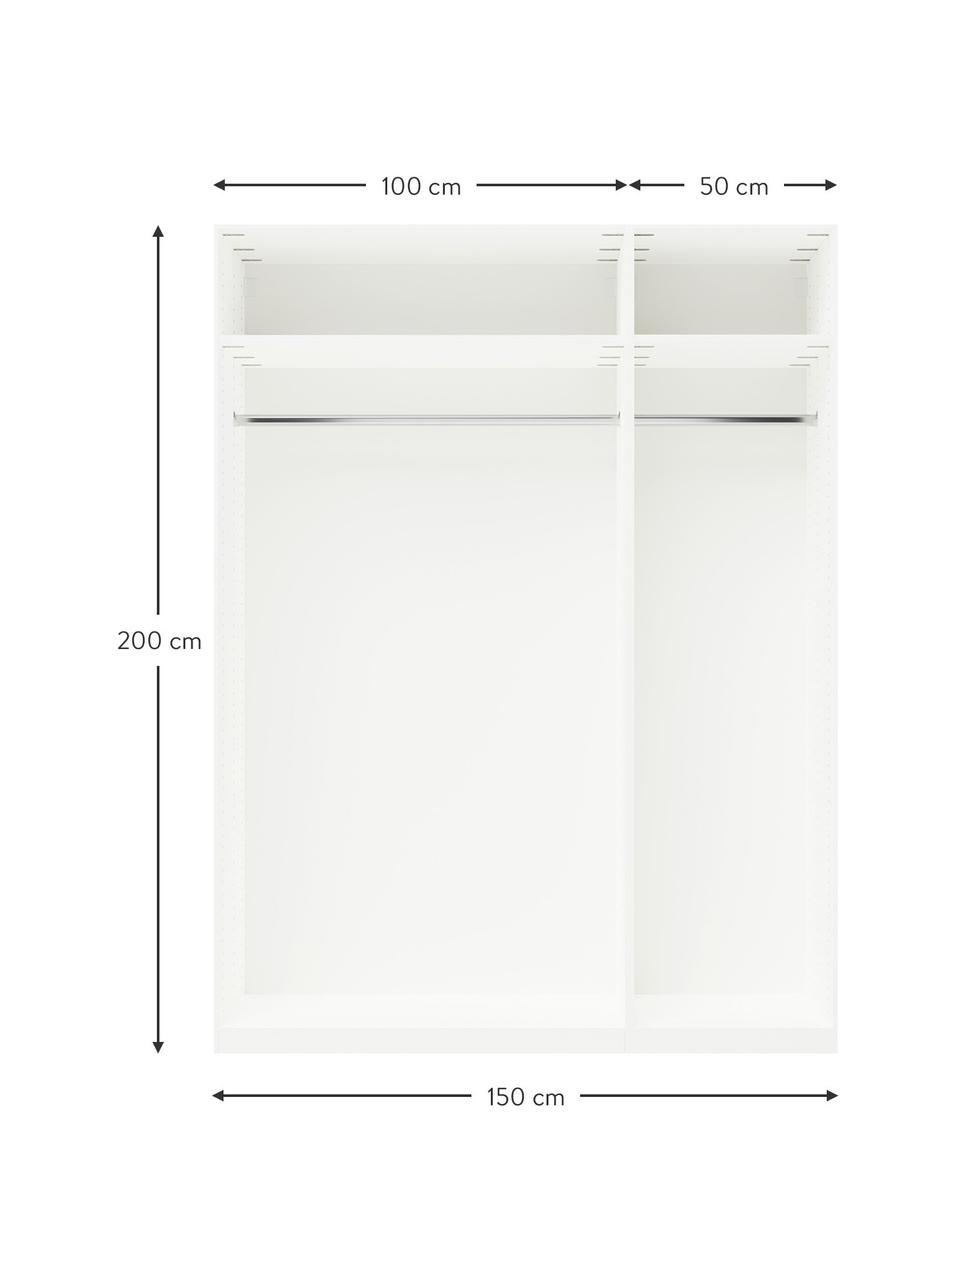 Modulaire draaideurkast Charlotte in wit met 3 deuren, verschillende varianten, Frame: met melamine beklede spaa, Wit, B 150 x H 200 cm, basis interieur